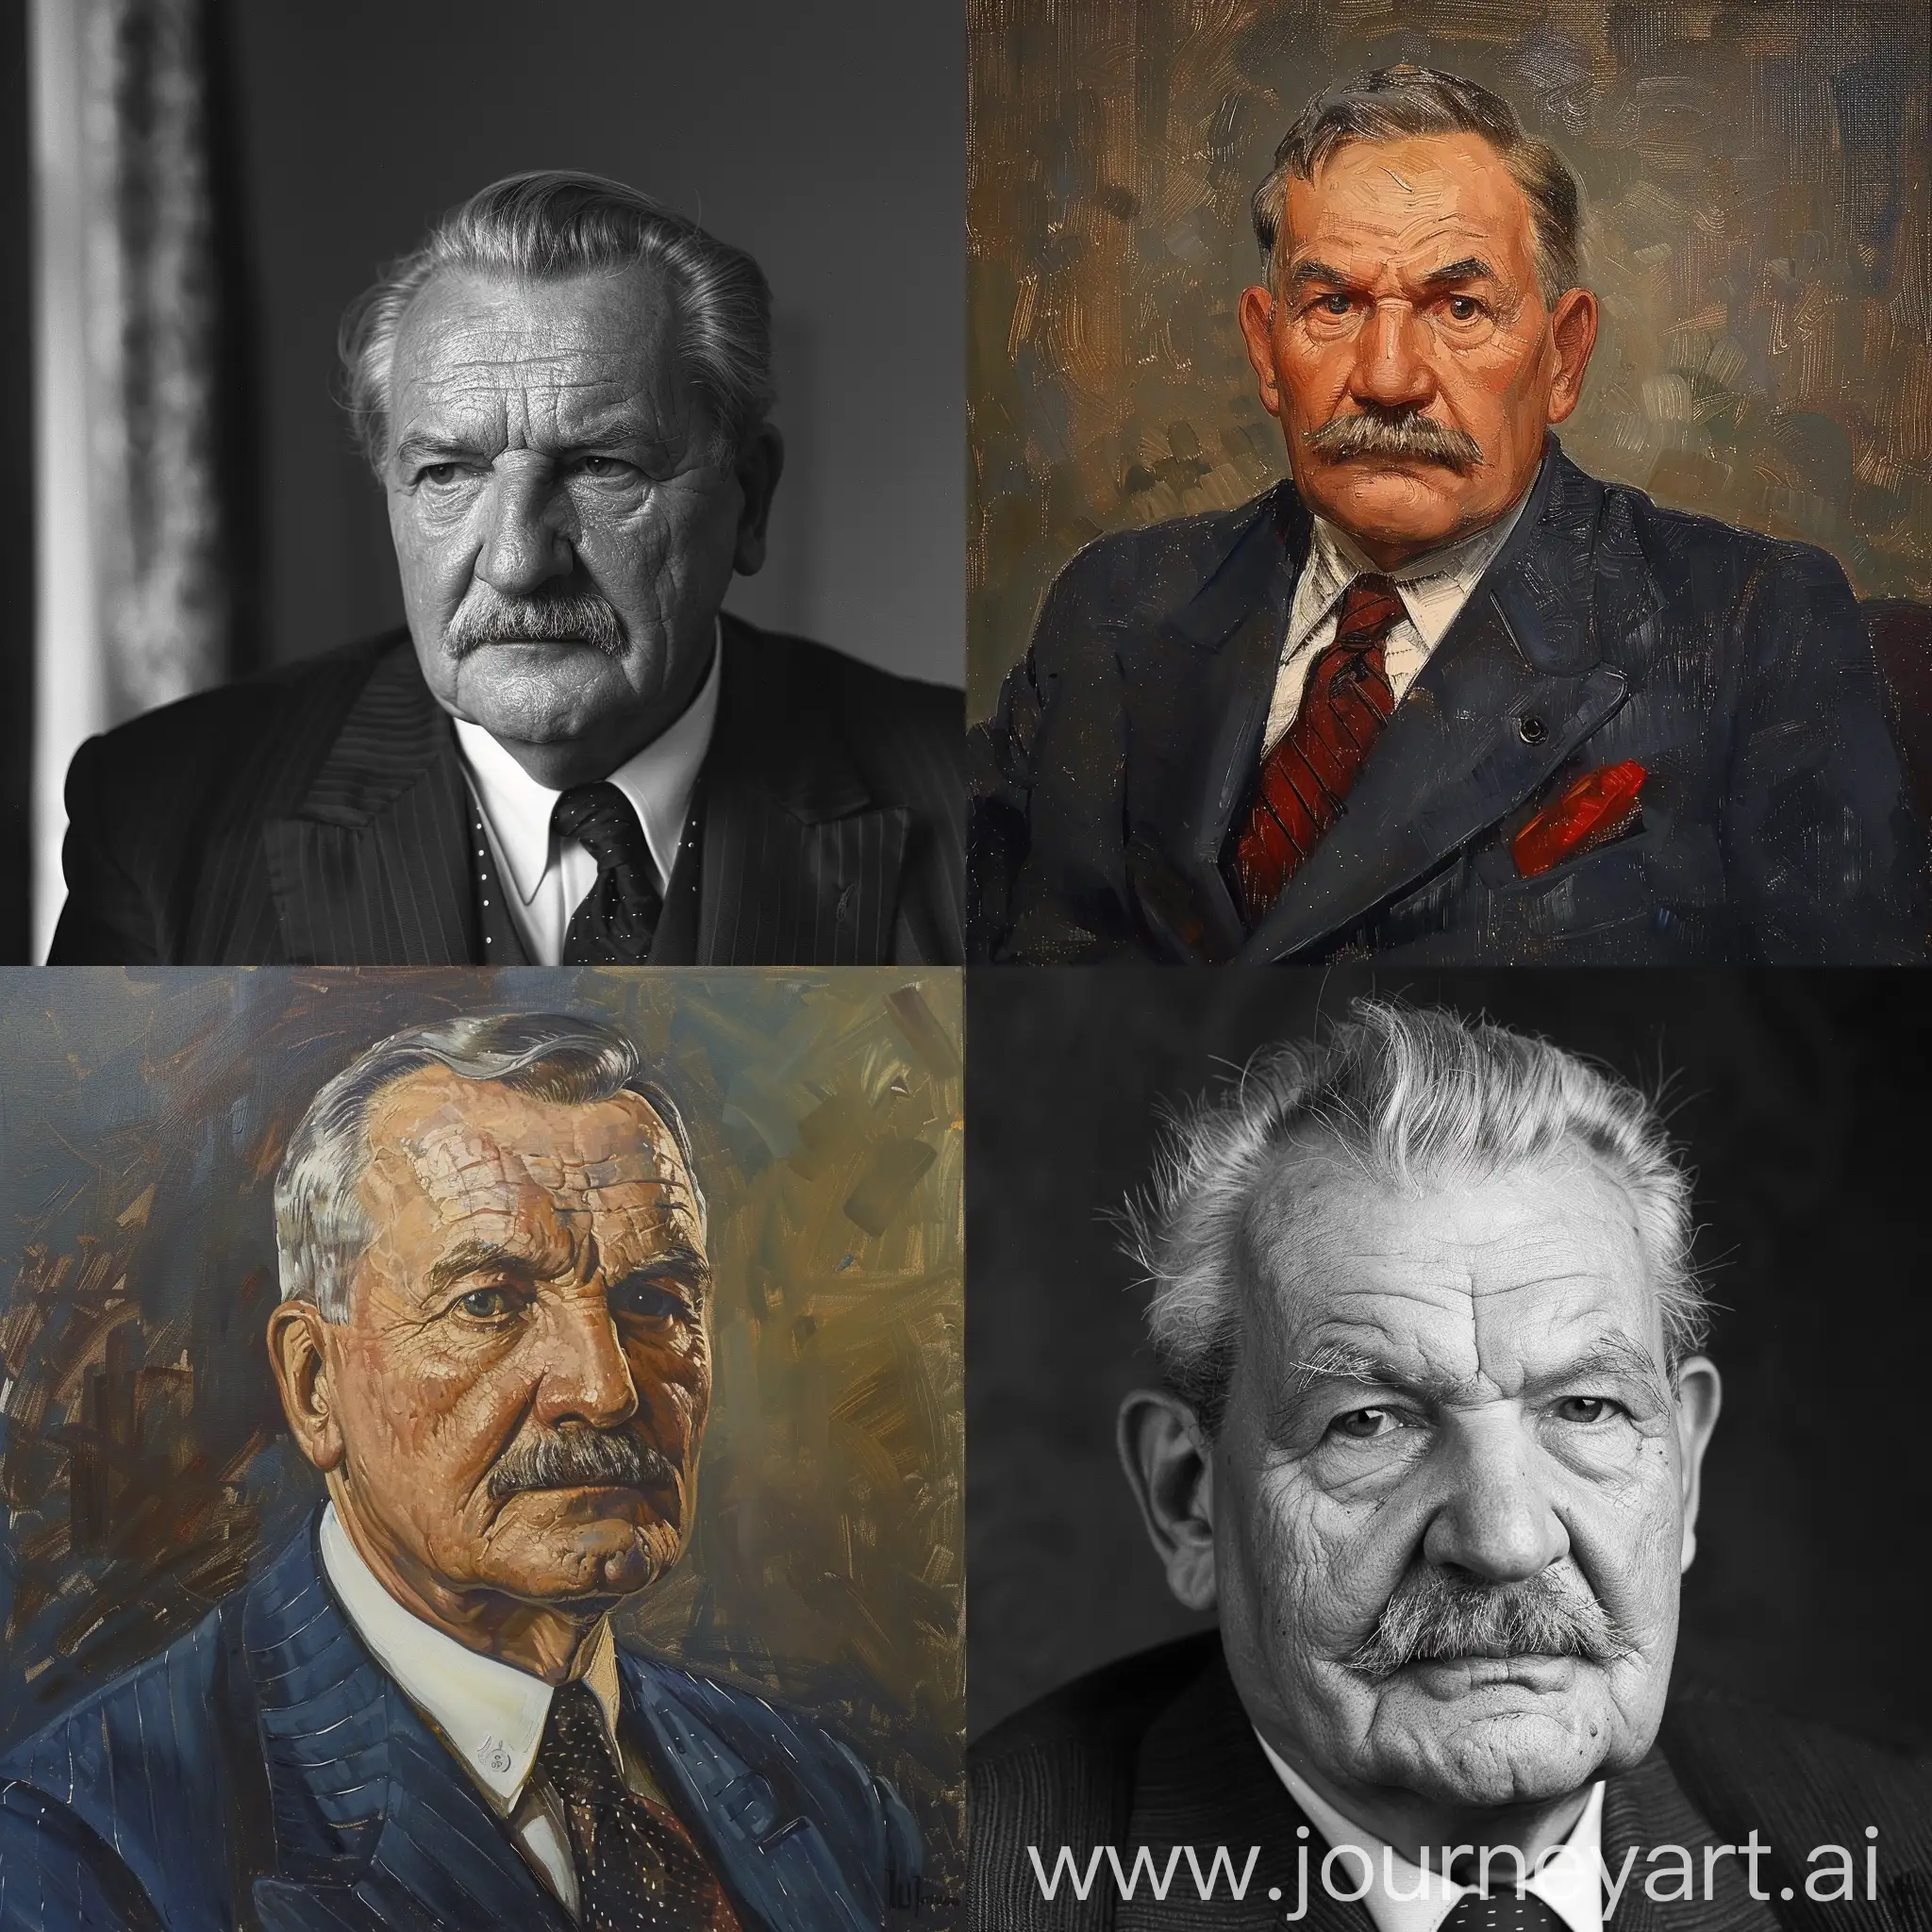 Lech-Walesa-Portrait-Inspirational-Leader-in-Monochrome